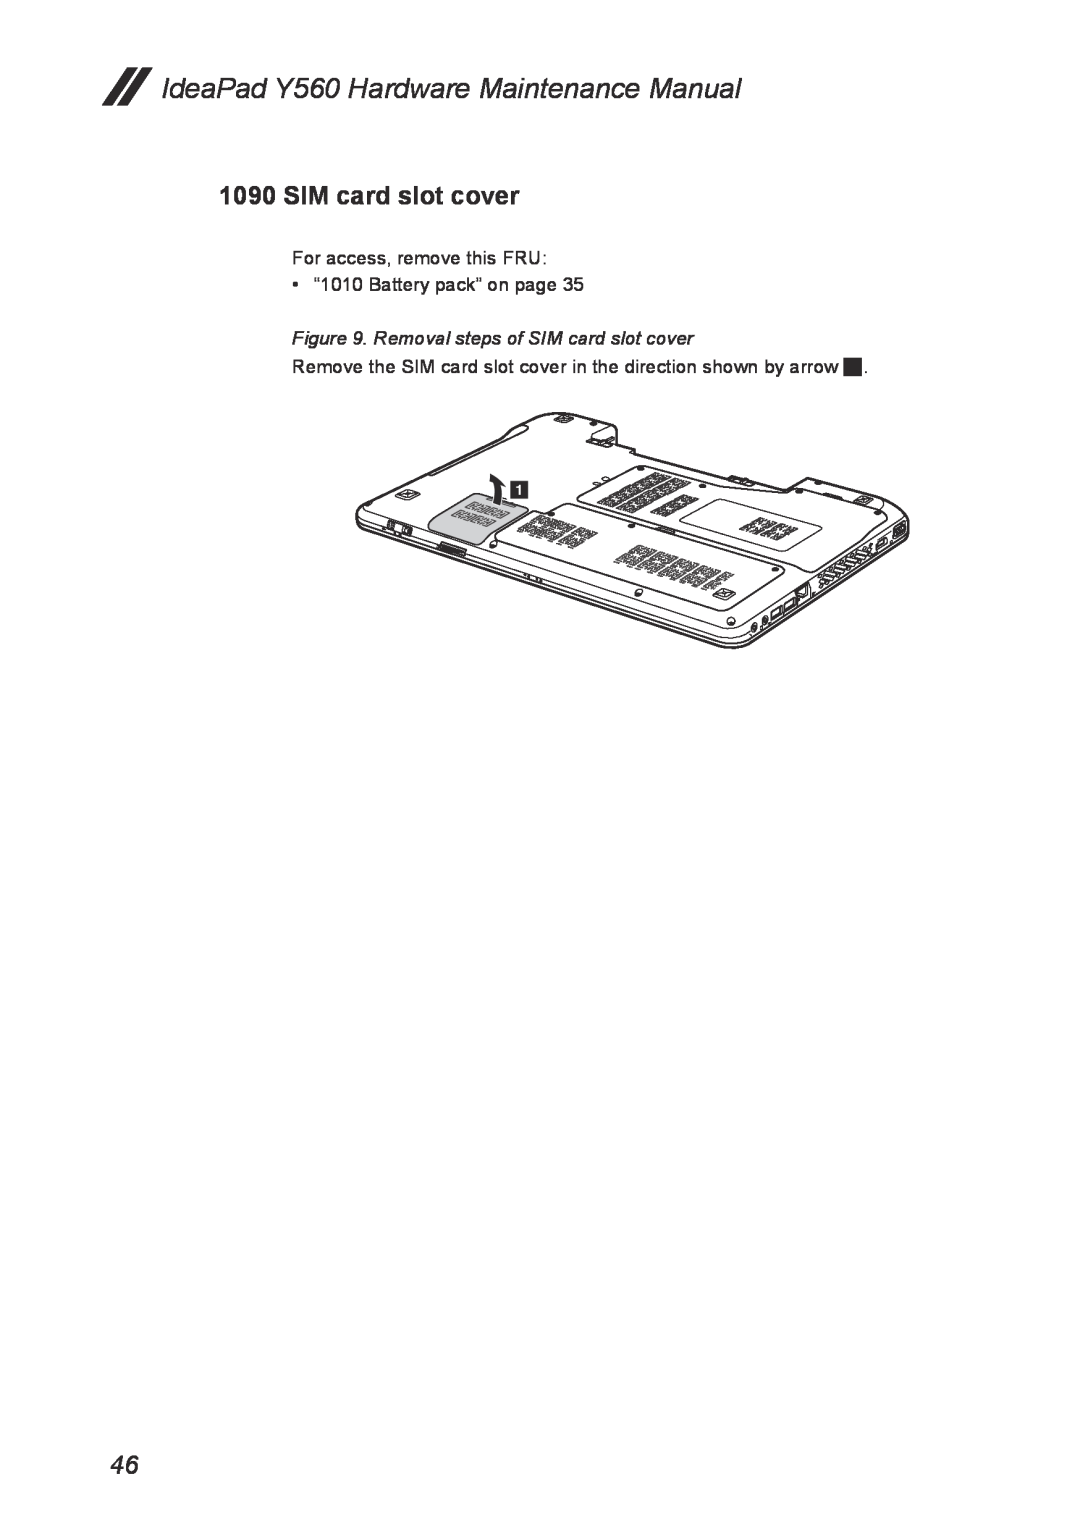 Lenovo manual Removal steps of SIM card slot cover, IdeaPad Y560 Hardware Maintenance Manual 